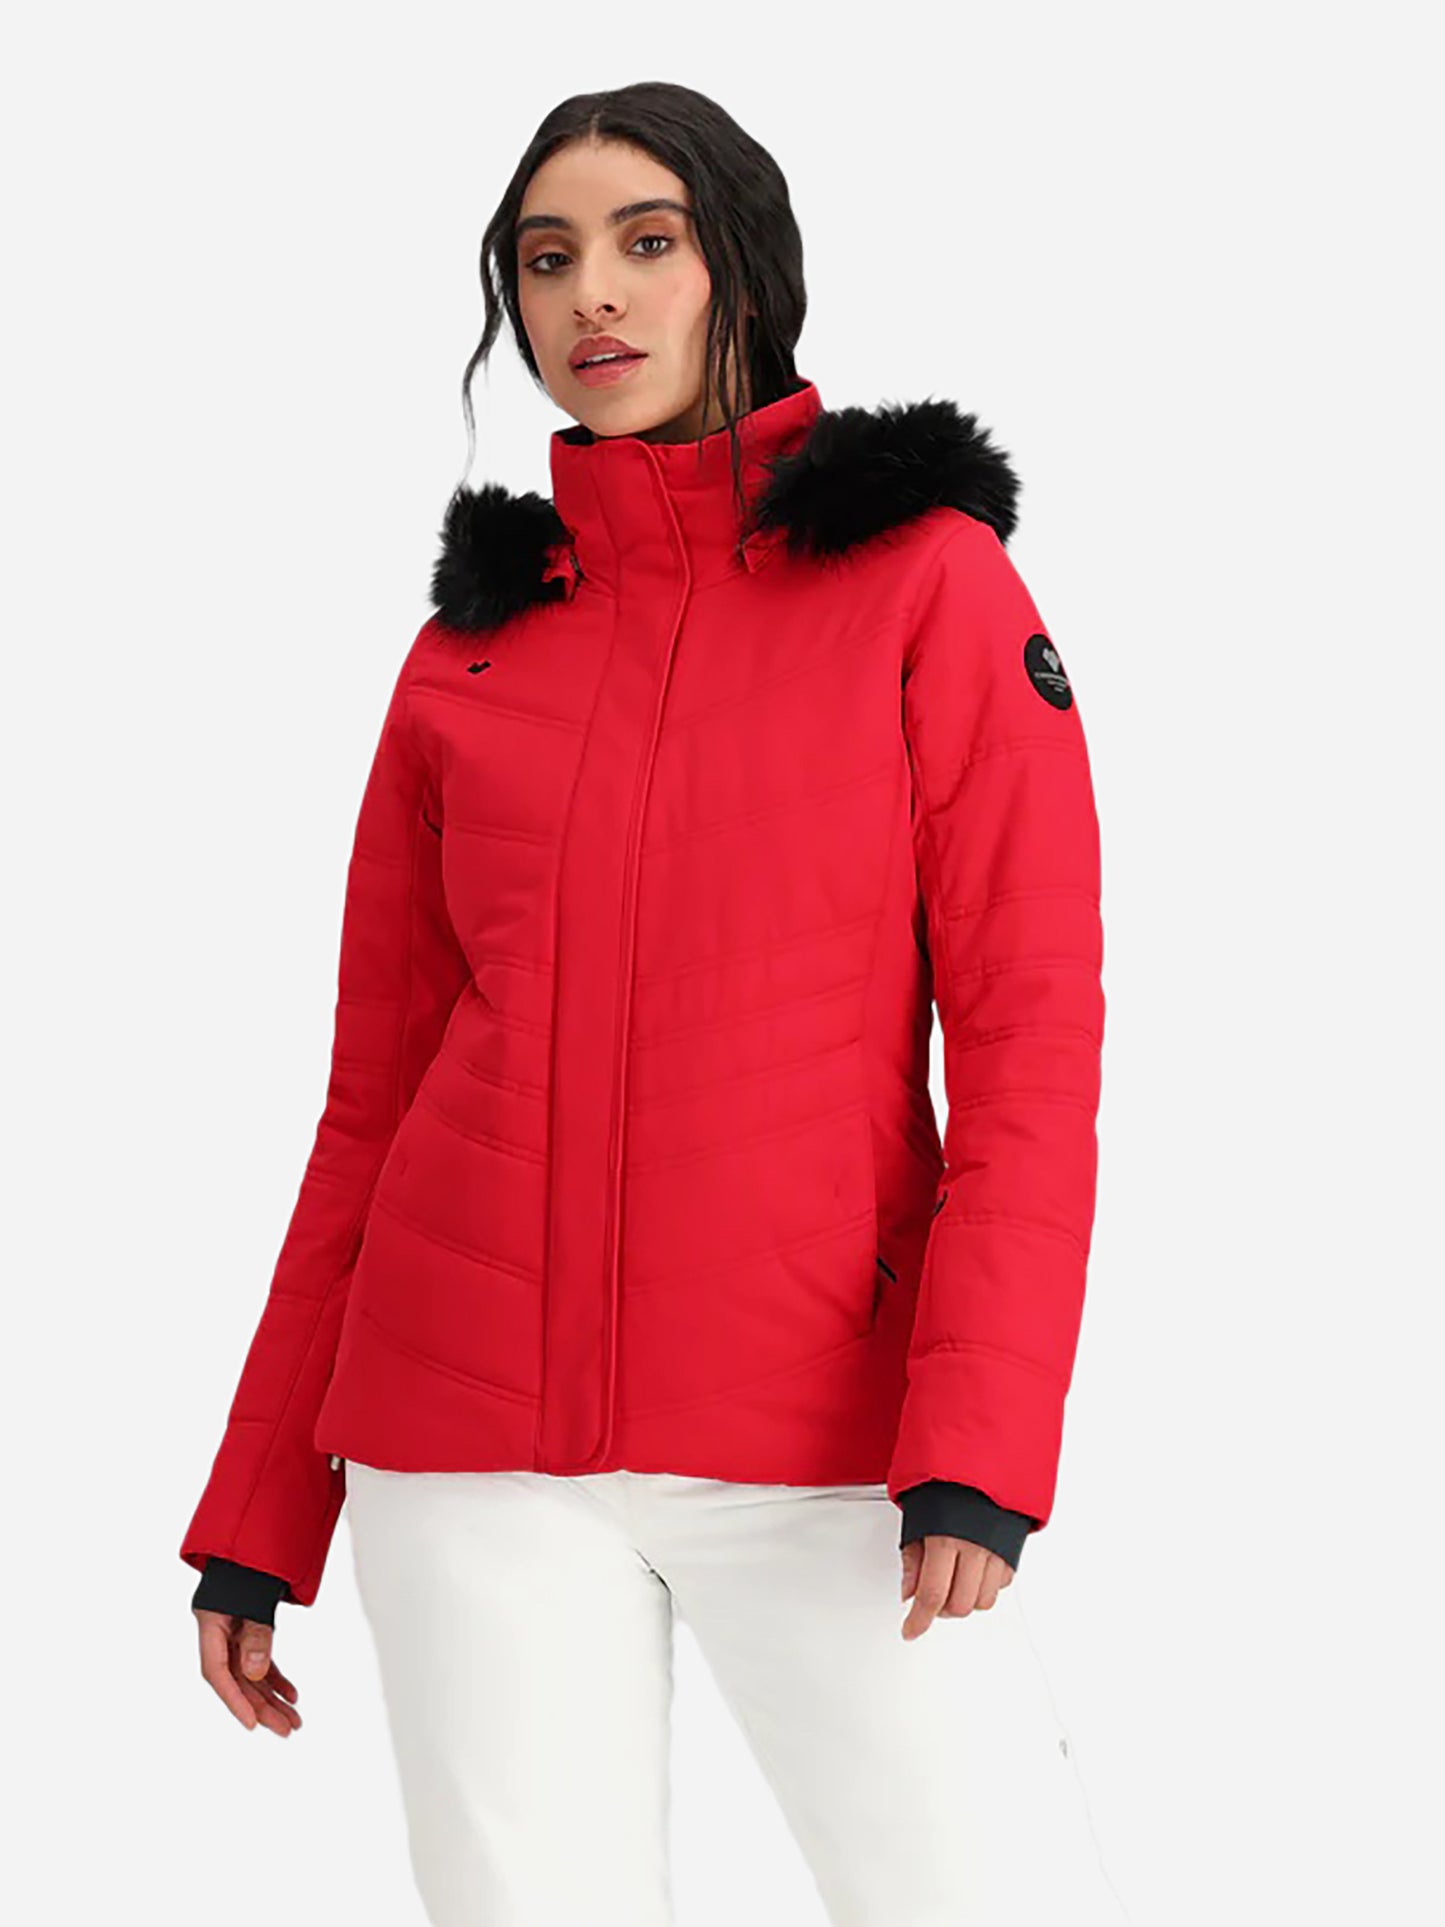 Obermeyer Women's Tuscany II Ski Jacket